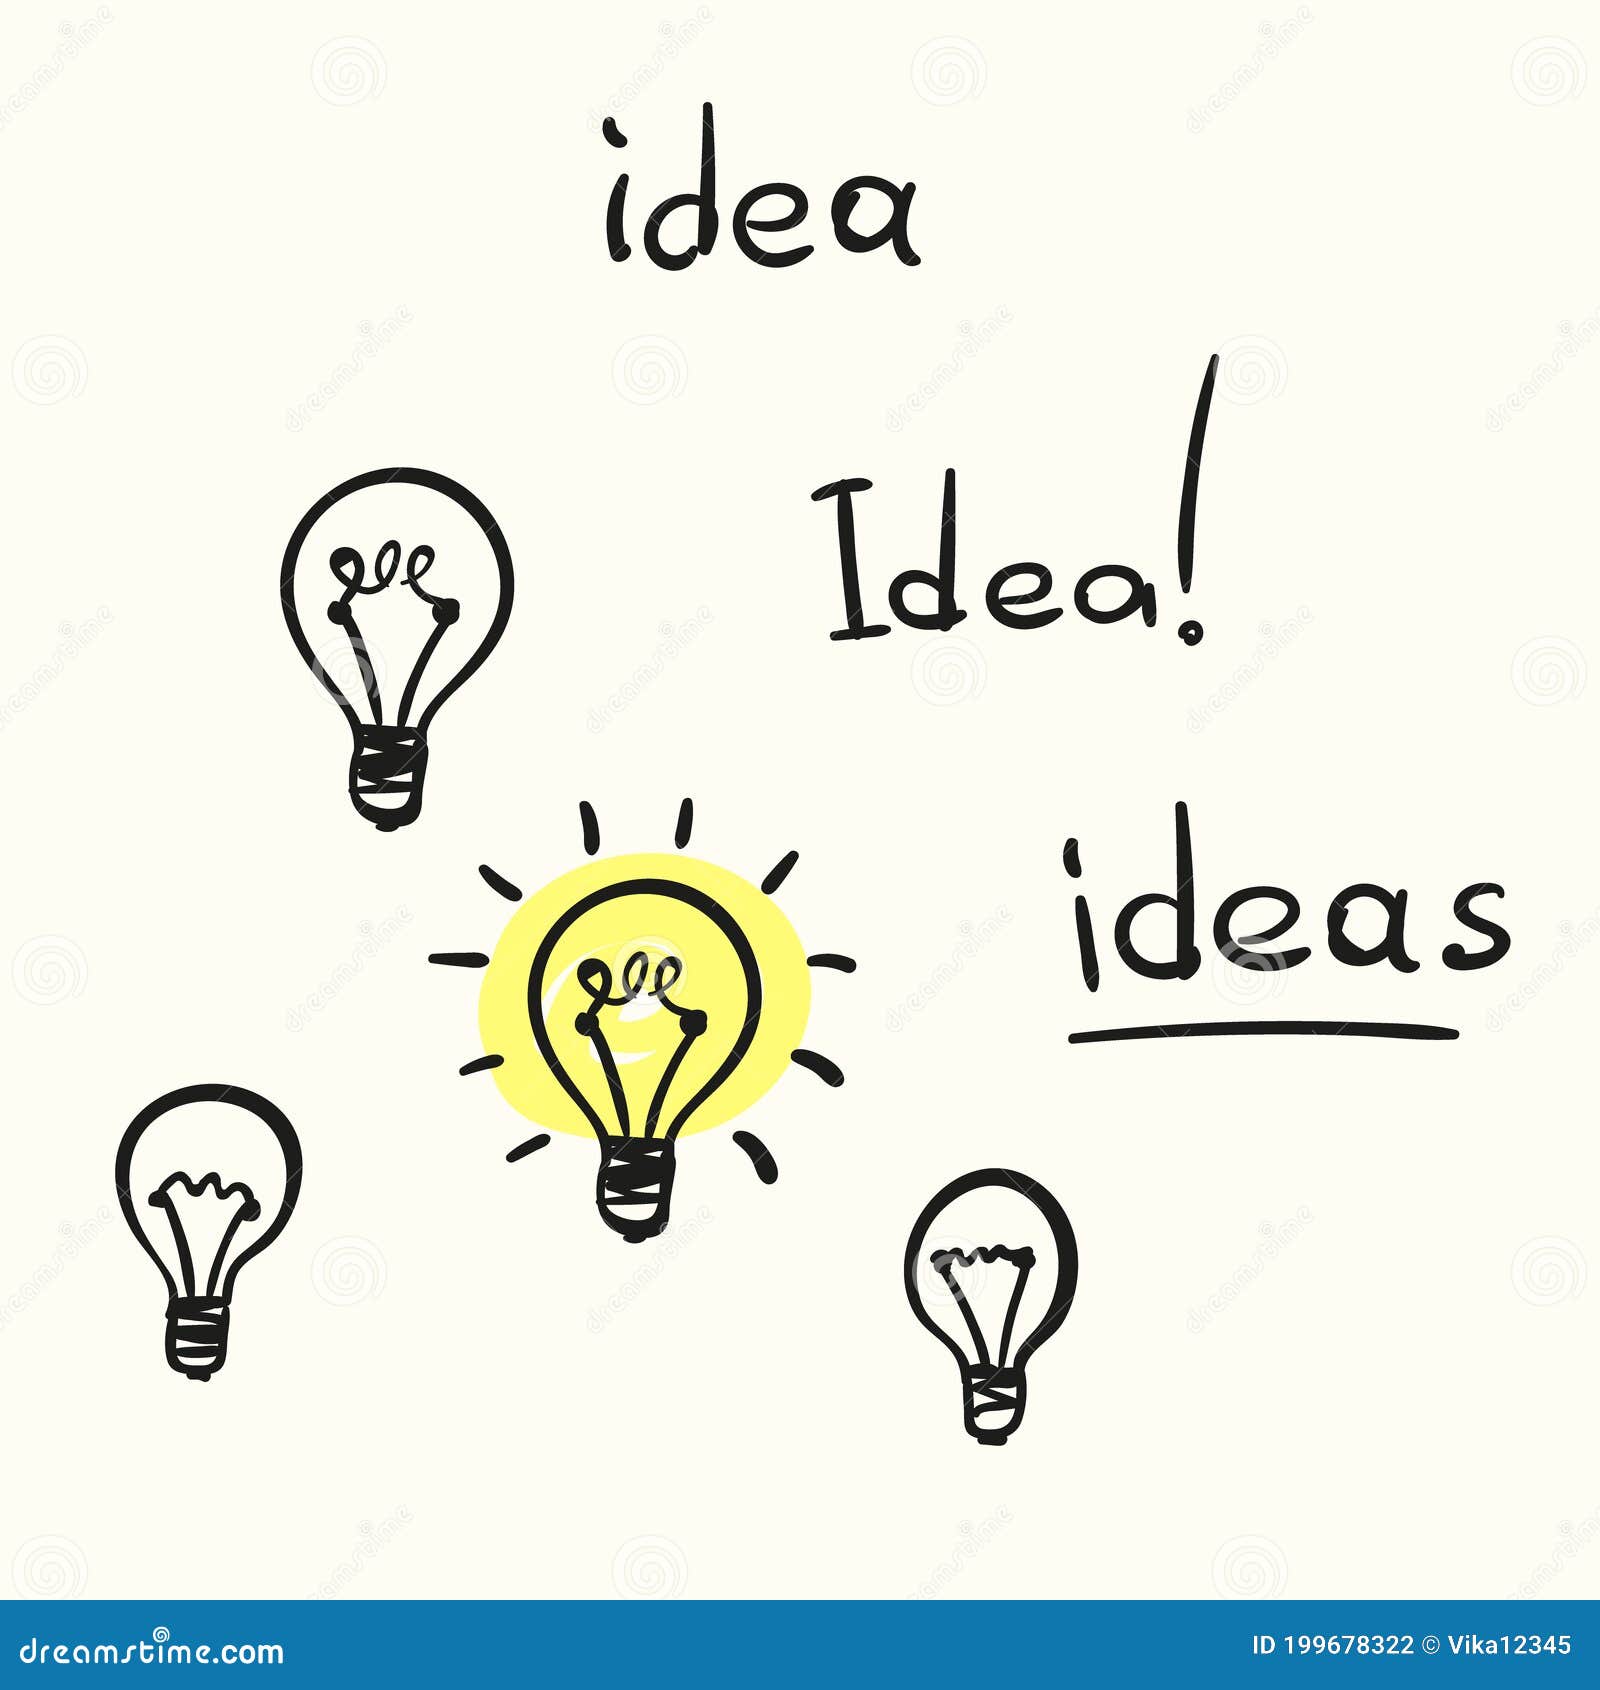 Idea Light Bulbs Hand Drawn Illustration Stock Vector - Illustration of ...